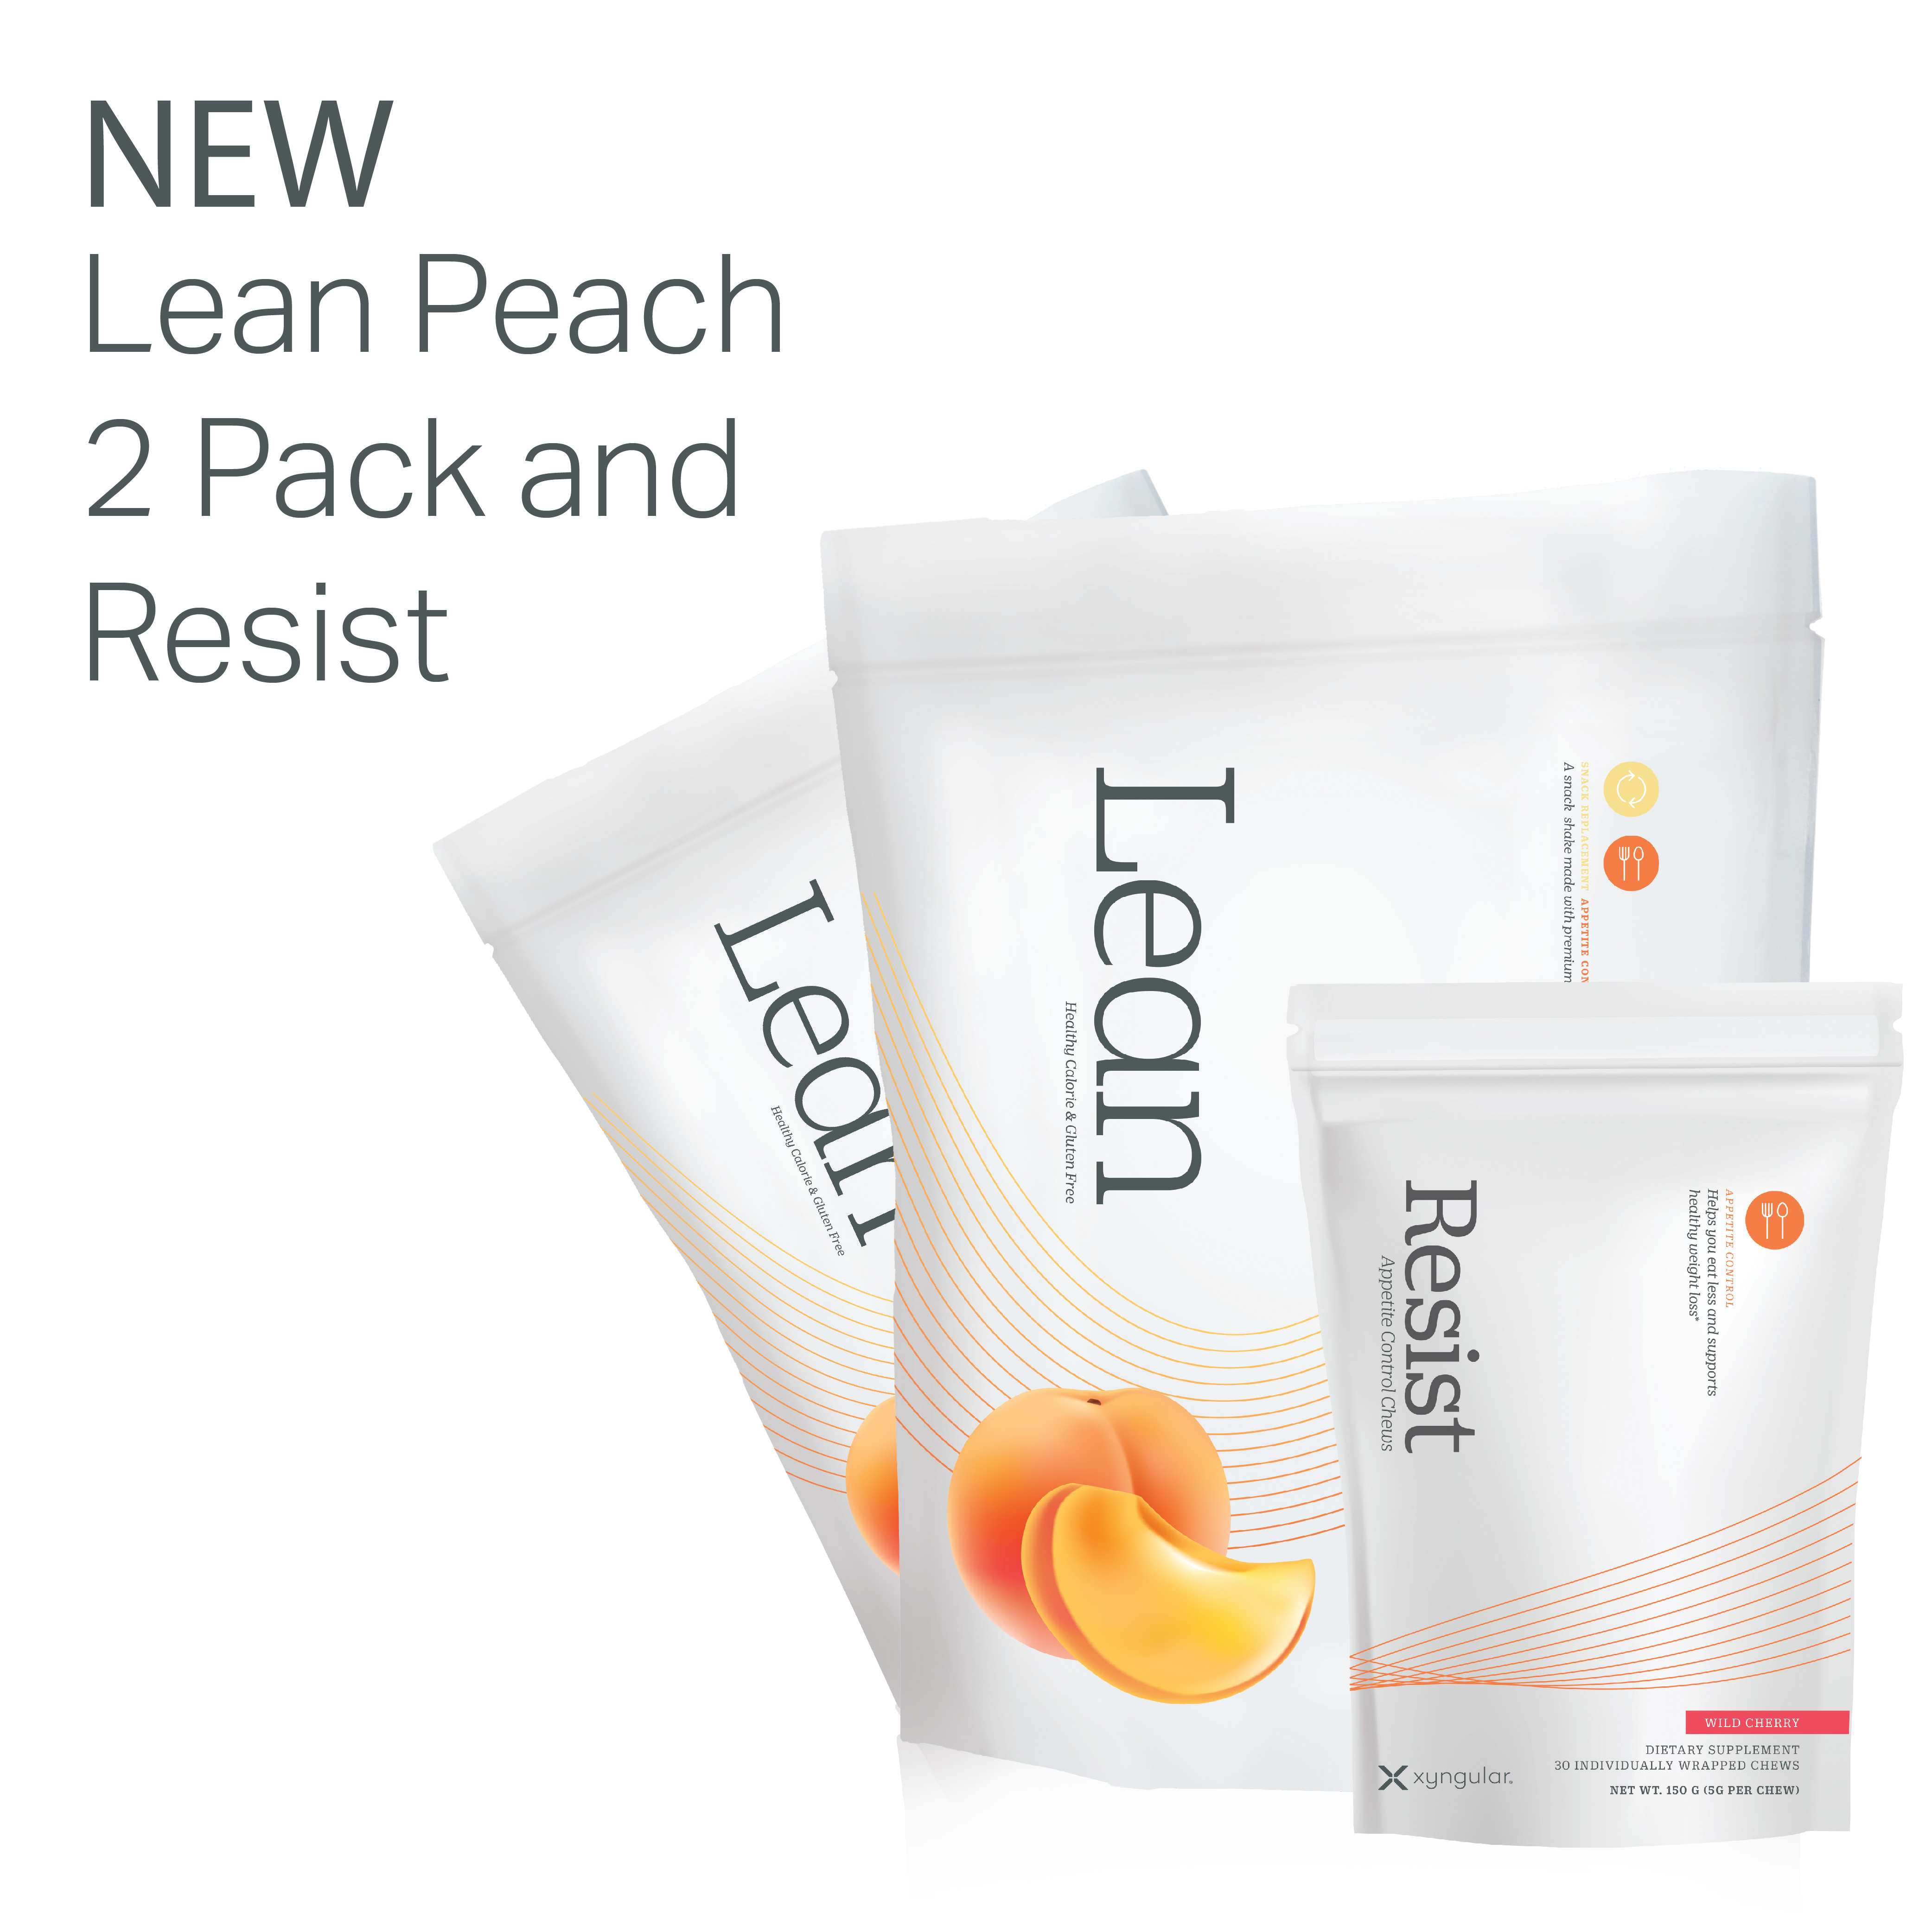 Lean Peach 2 Pack and Resist